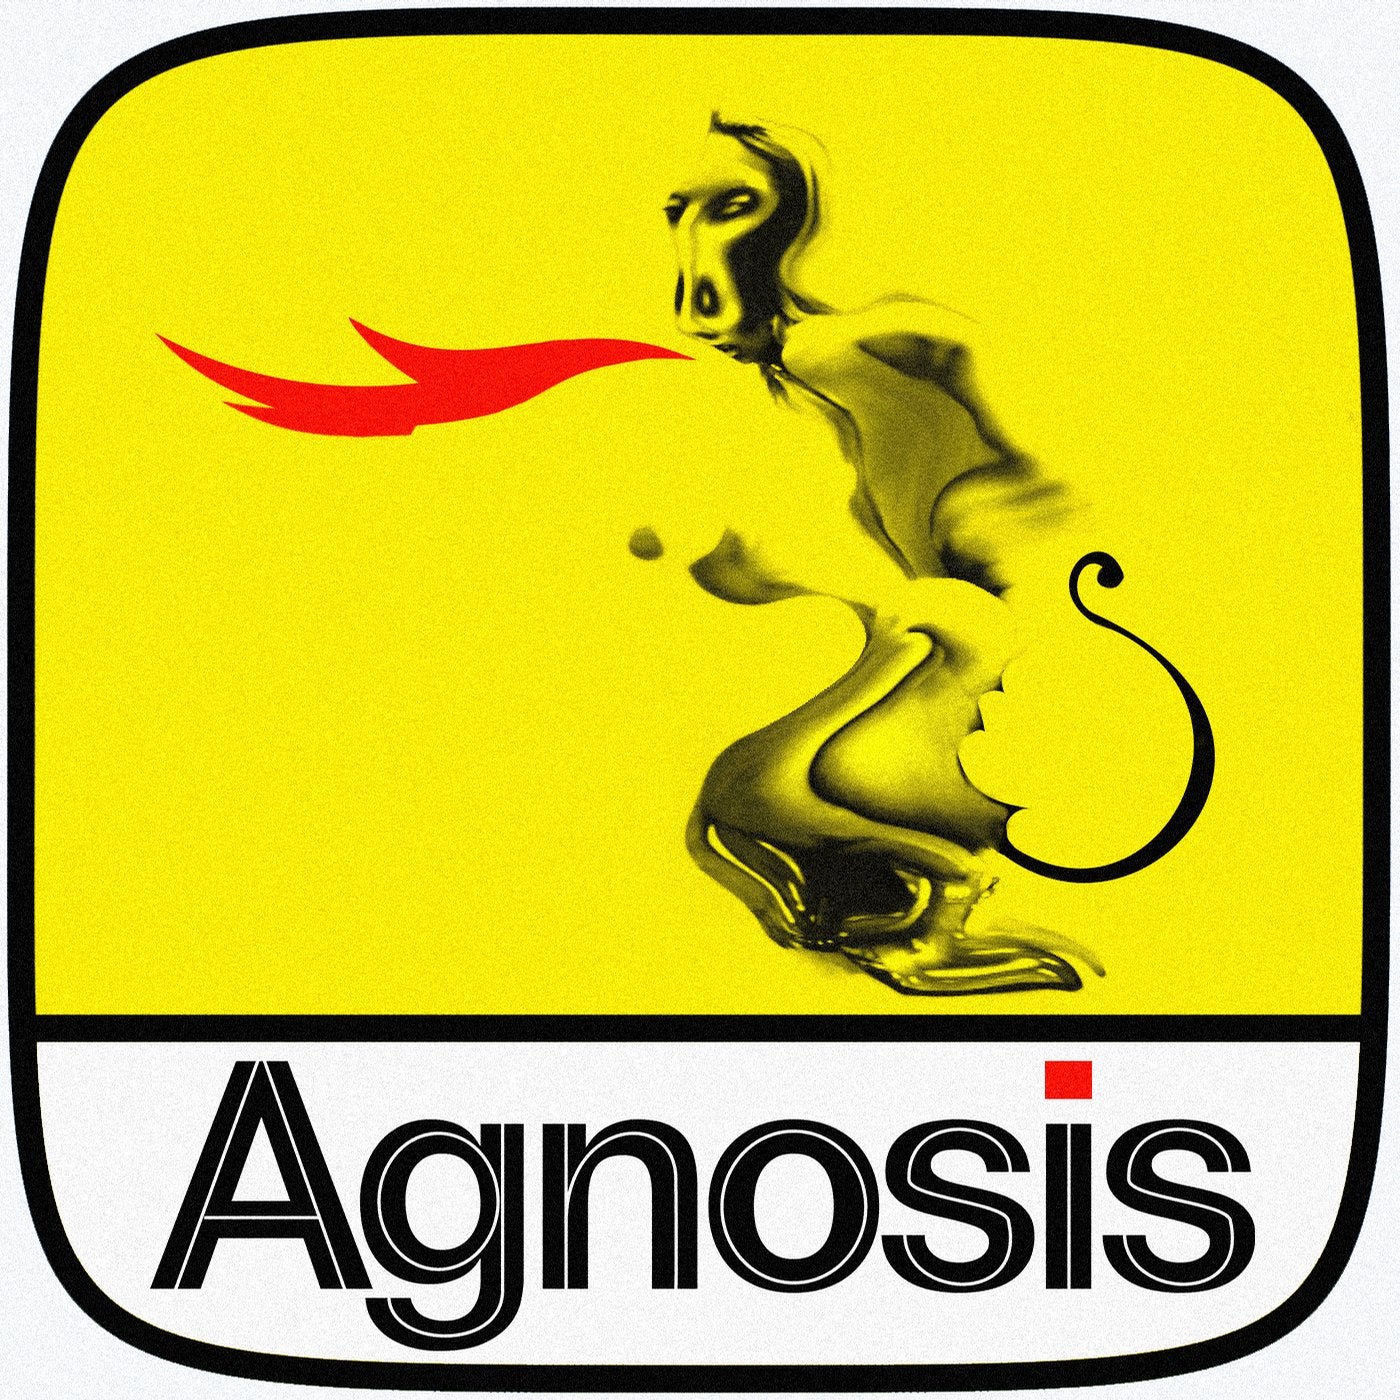 Agnosis